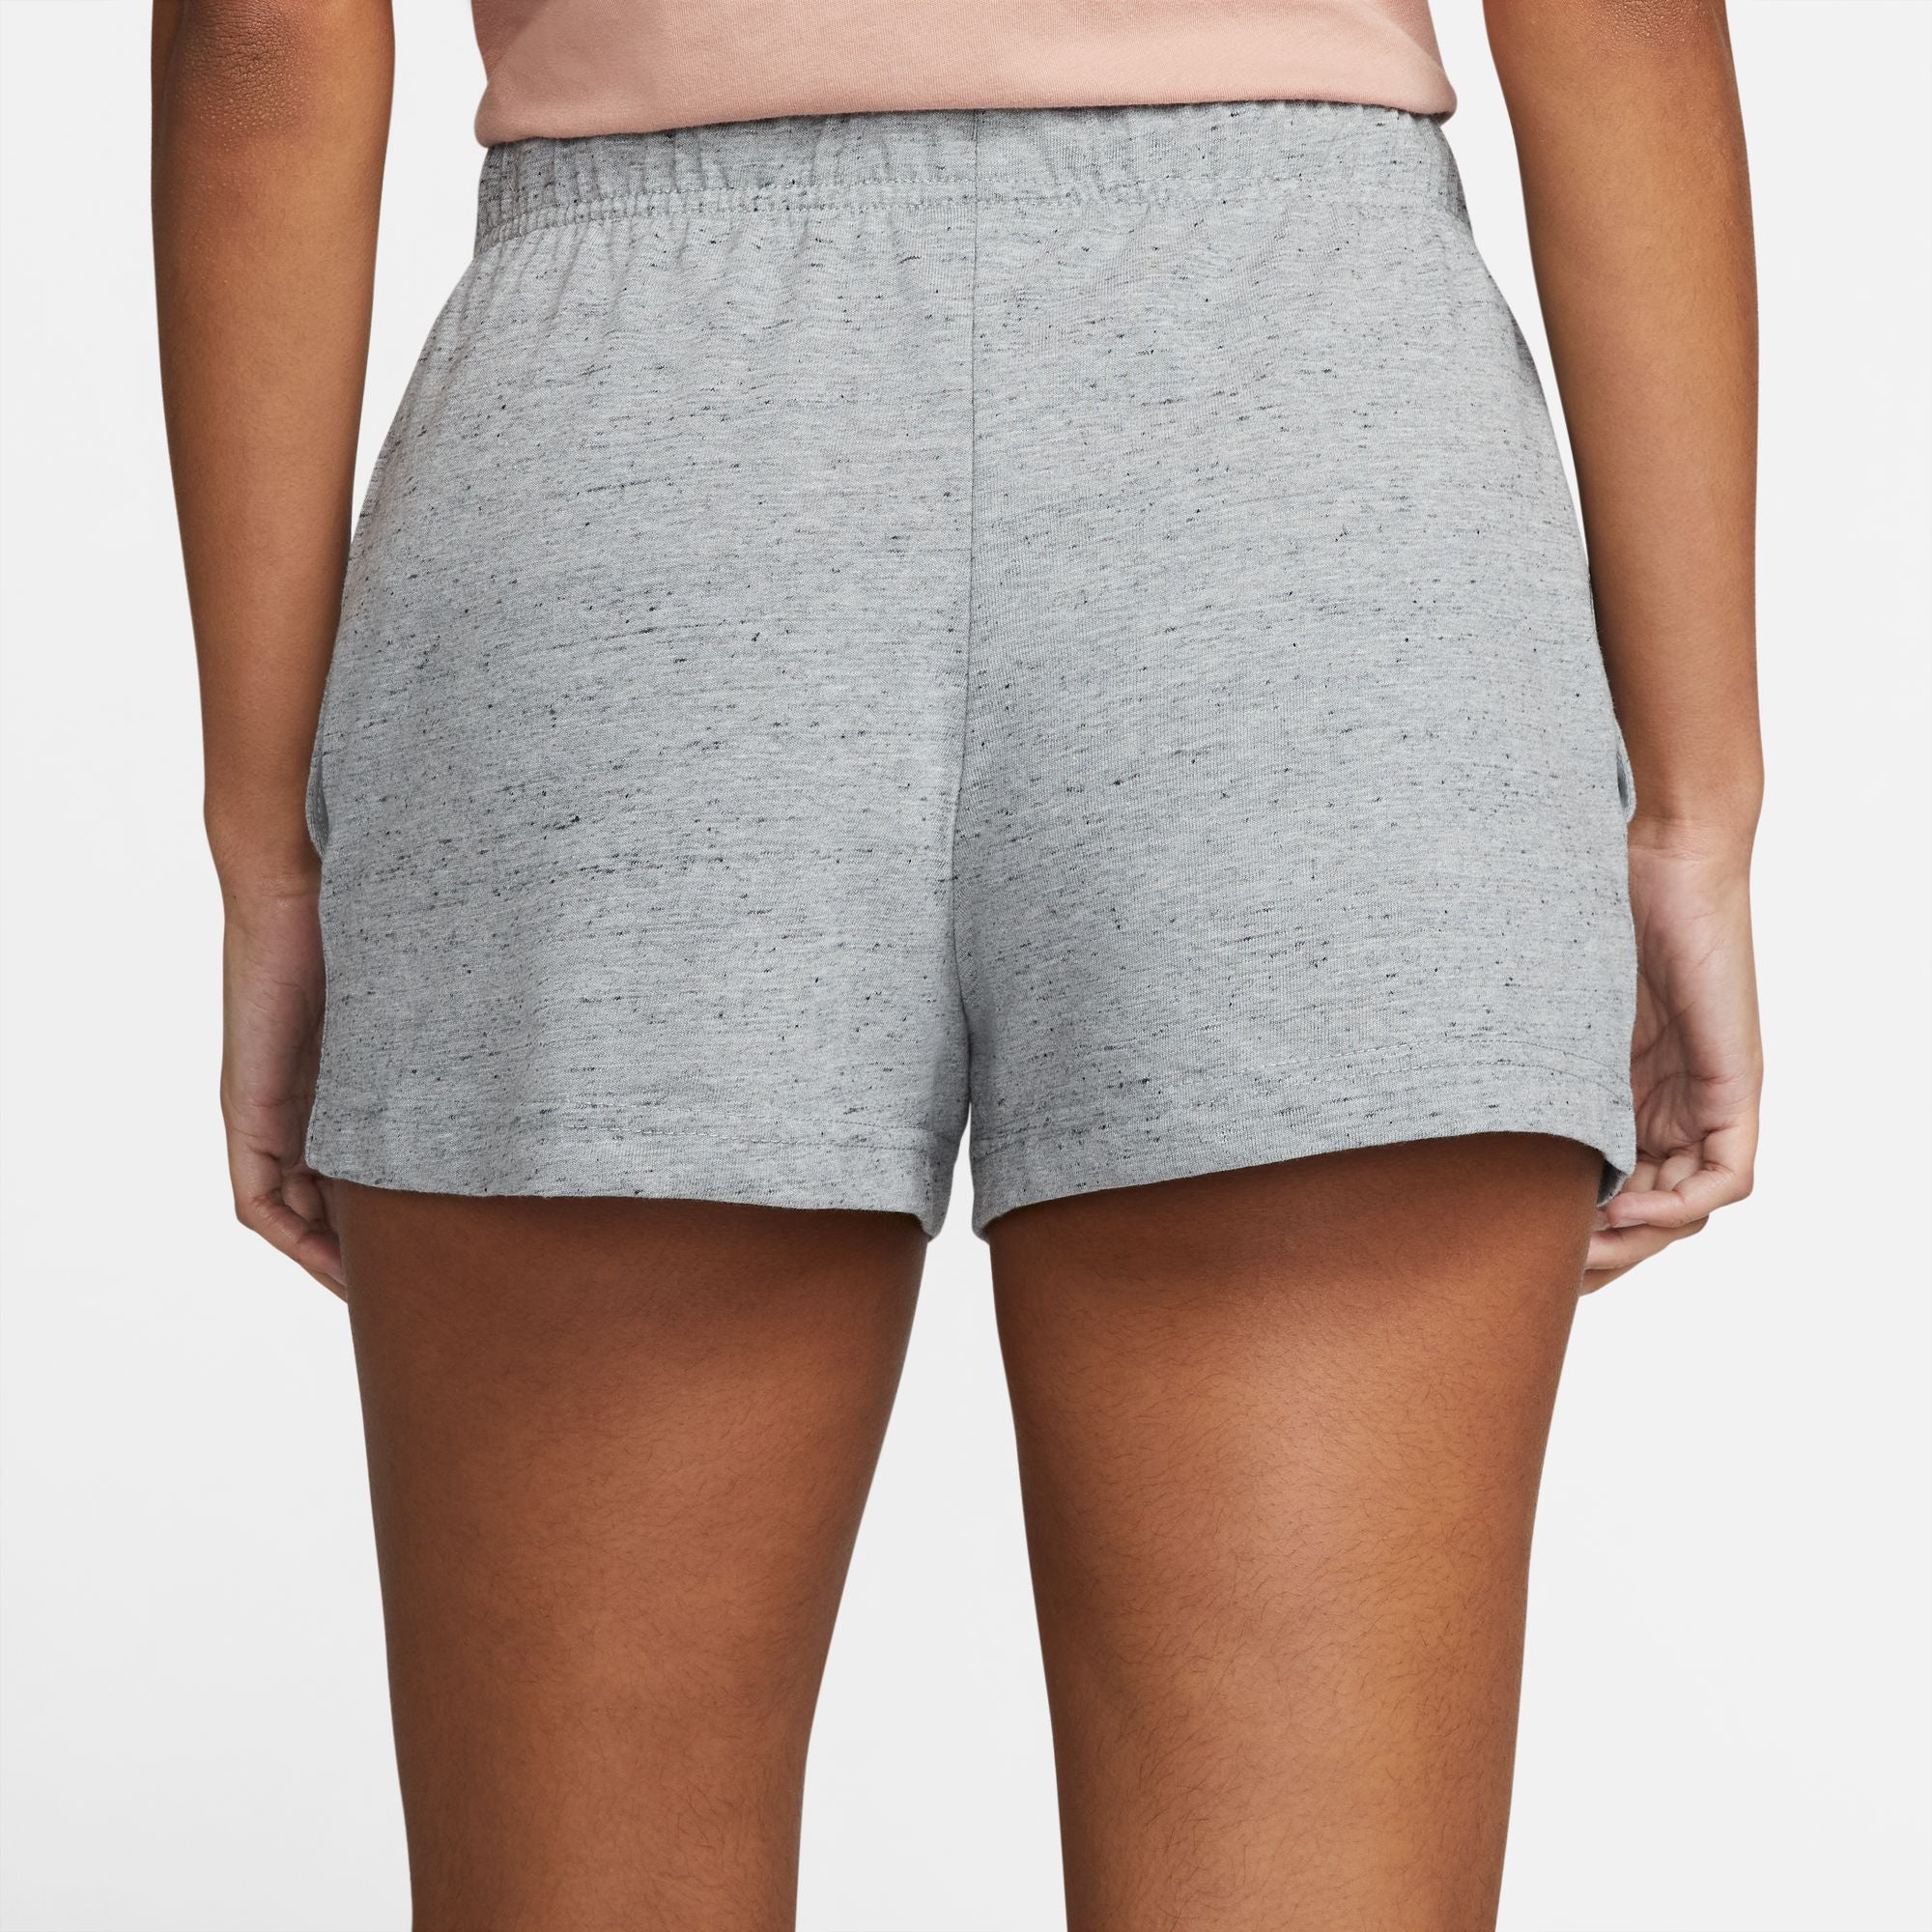 Nike Sportswear Gym Vintage Women's Shorts - DM6392